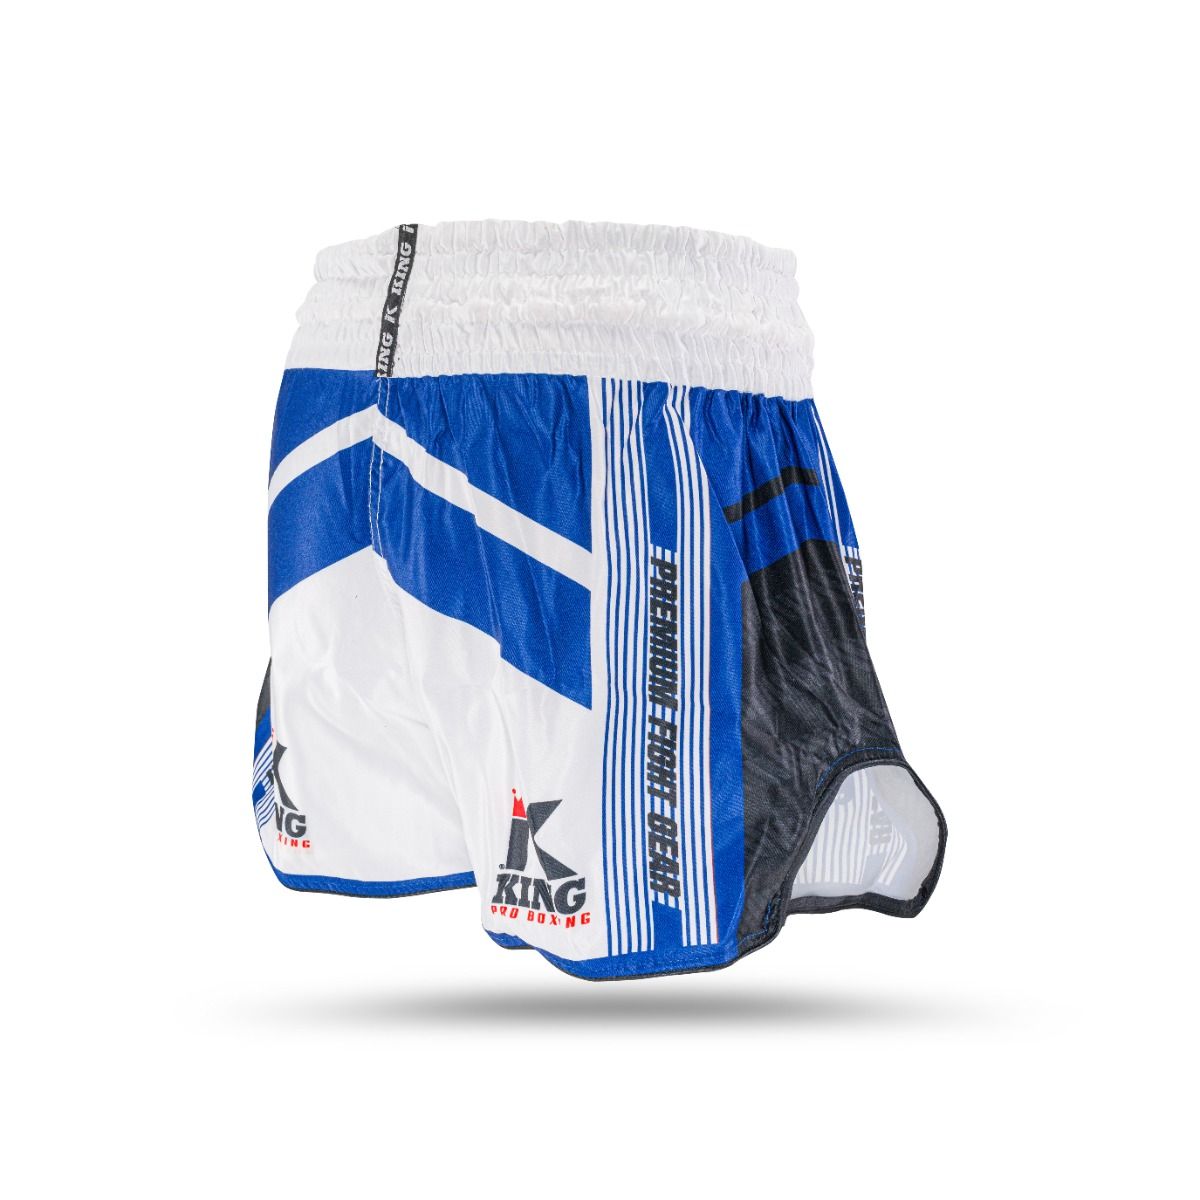 King Pro Boxing - ENDURANCE 8 - short - korte broek - Wit - blauw - white - blue 